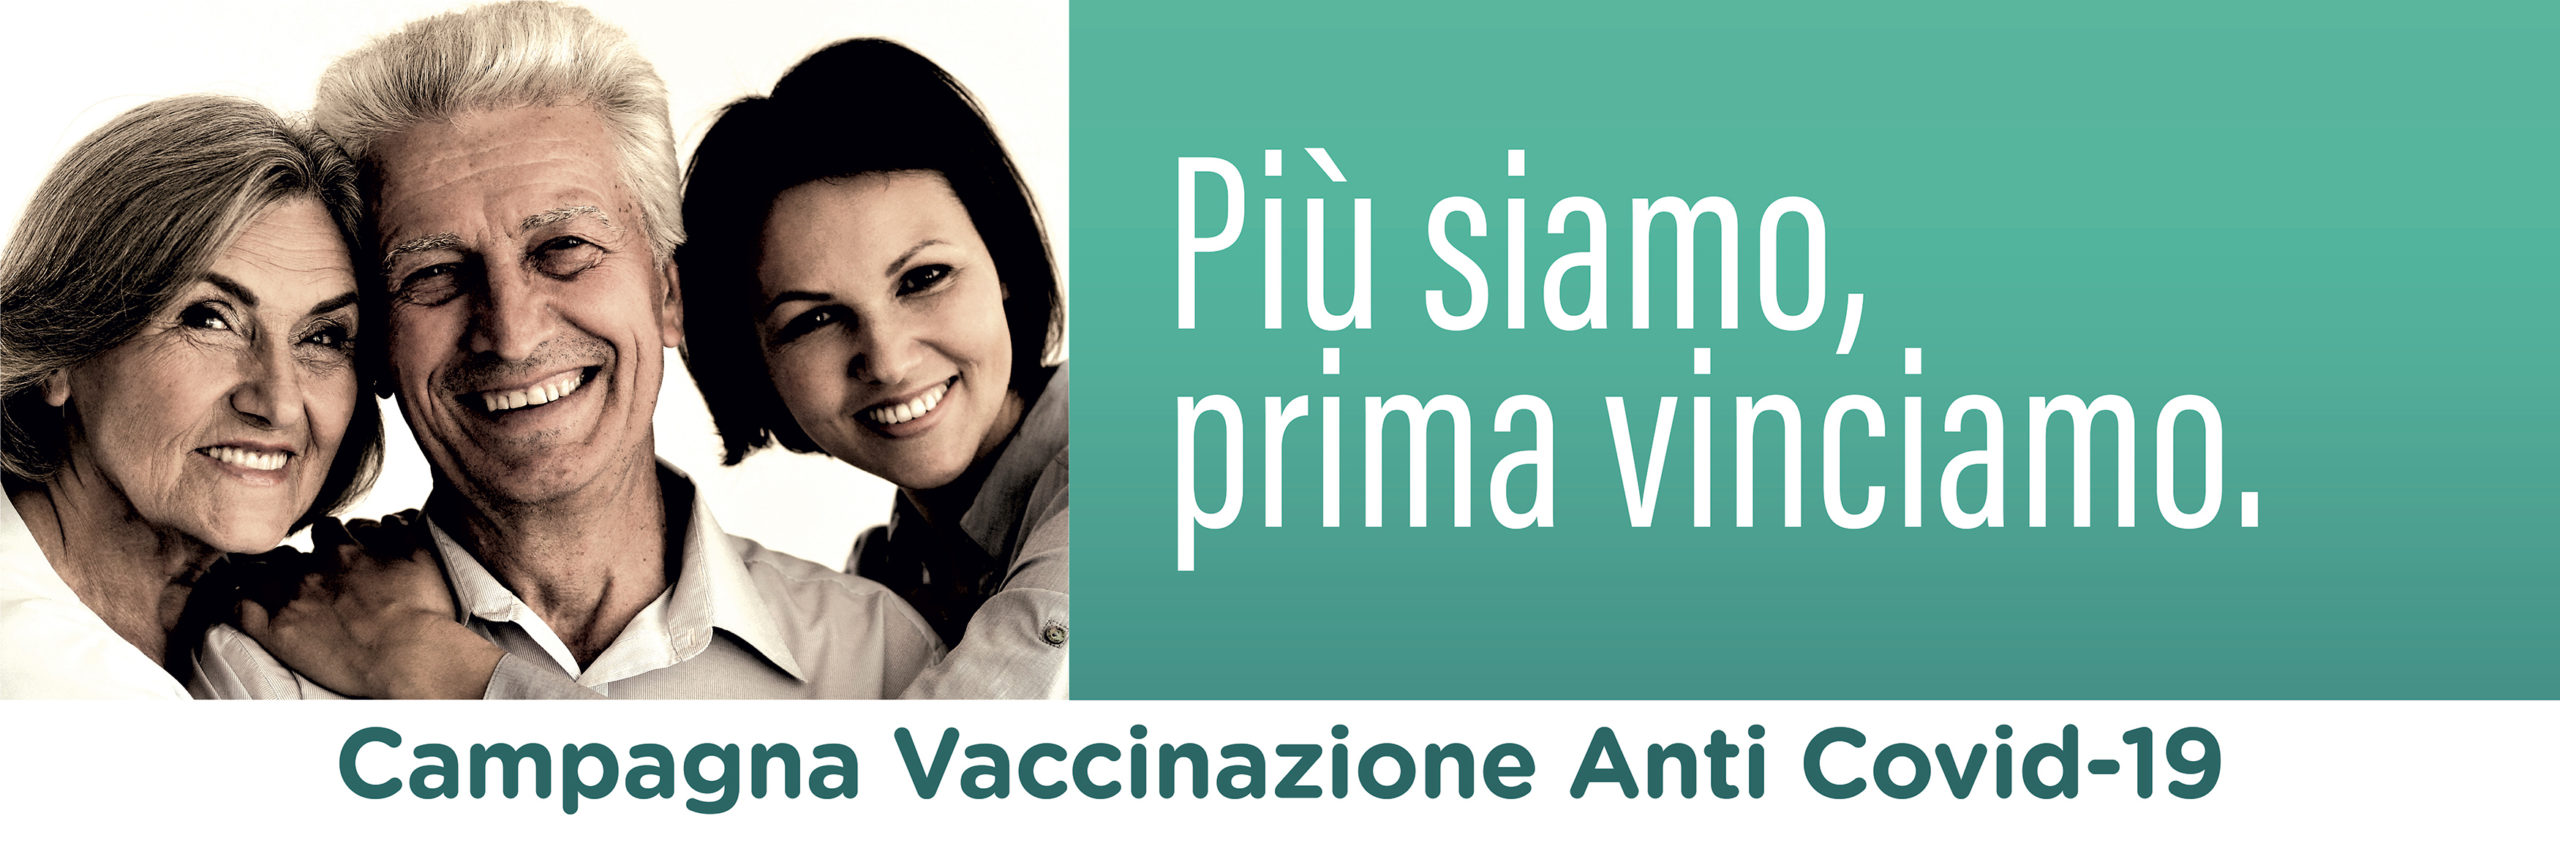 Campagna di vaccinazione anti-COVID-19